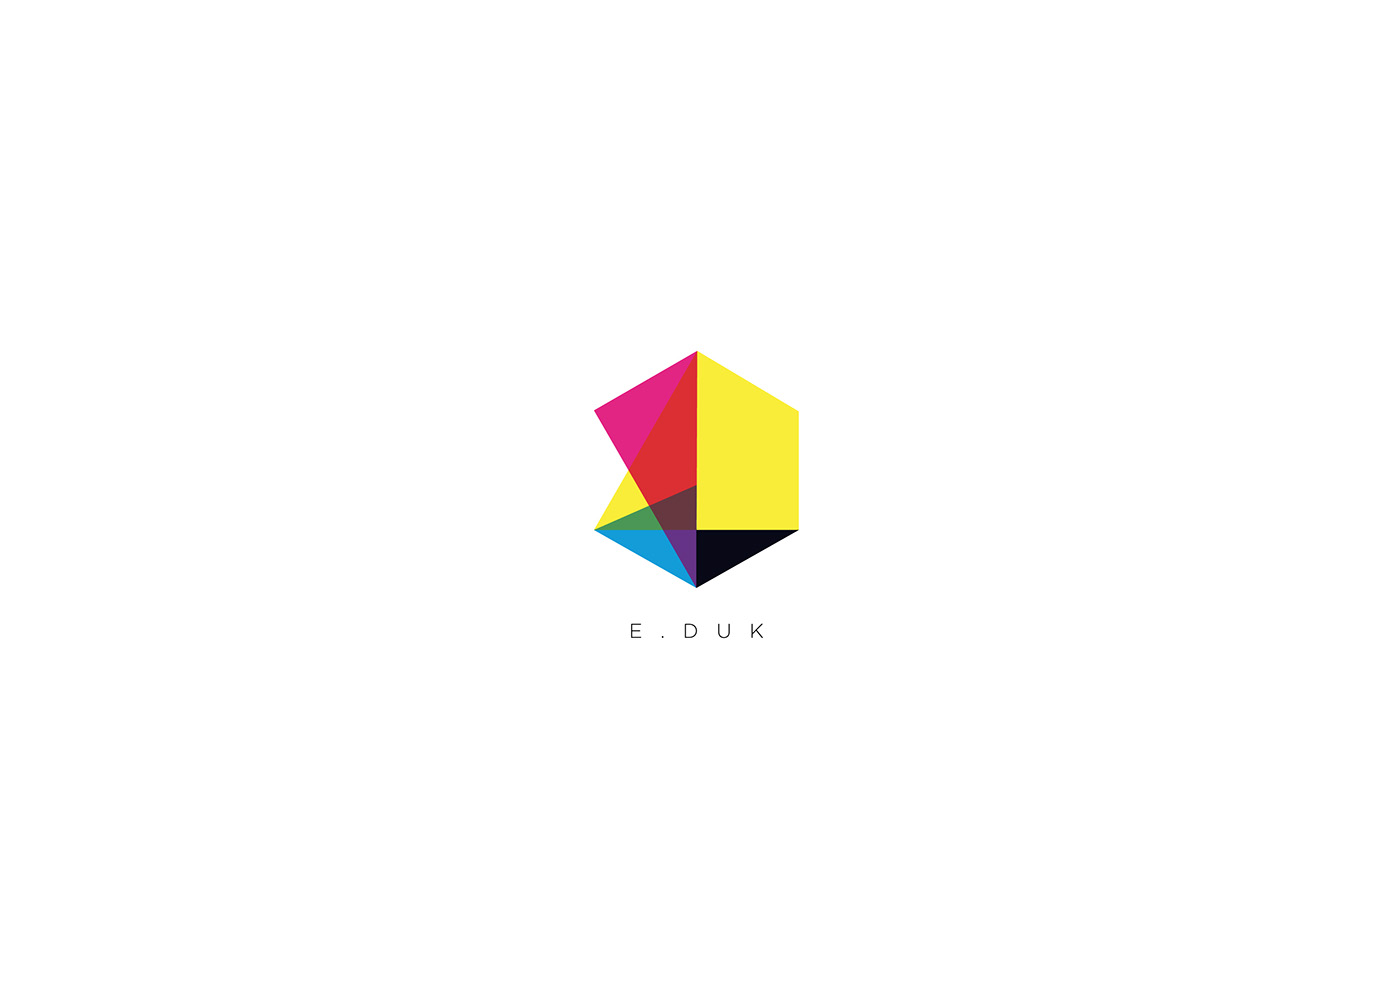 e.duk logo CMYK start up educational online disruptive knowledge school identity corporate